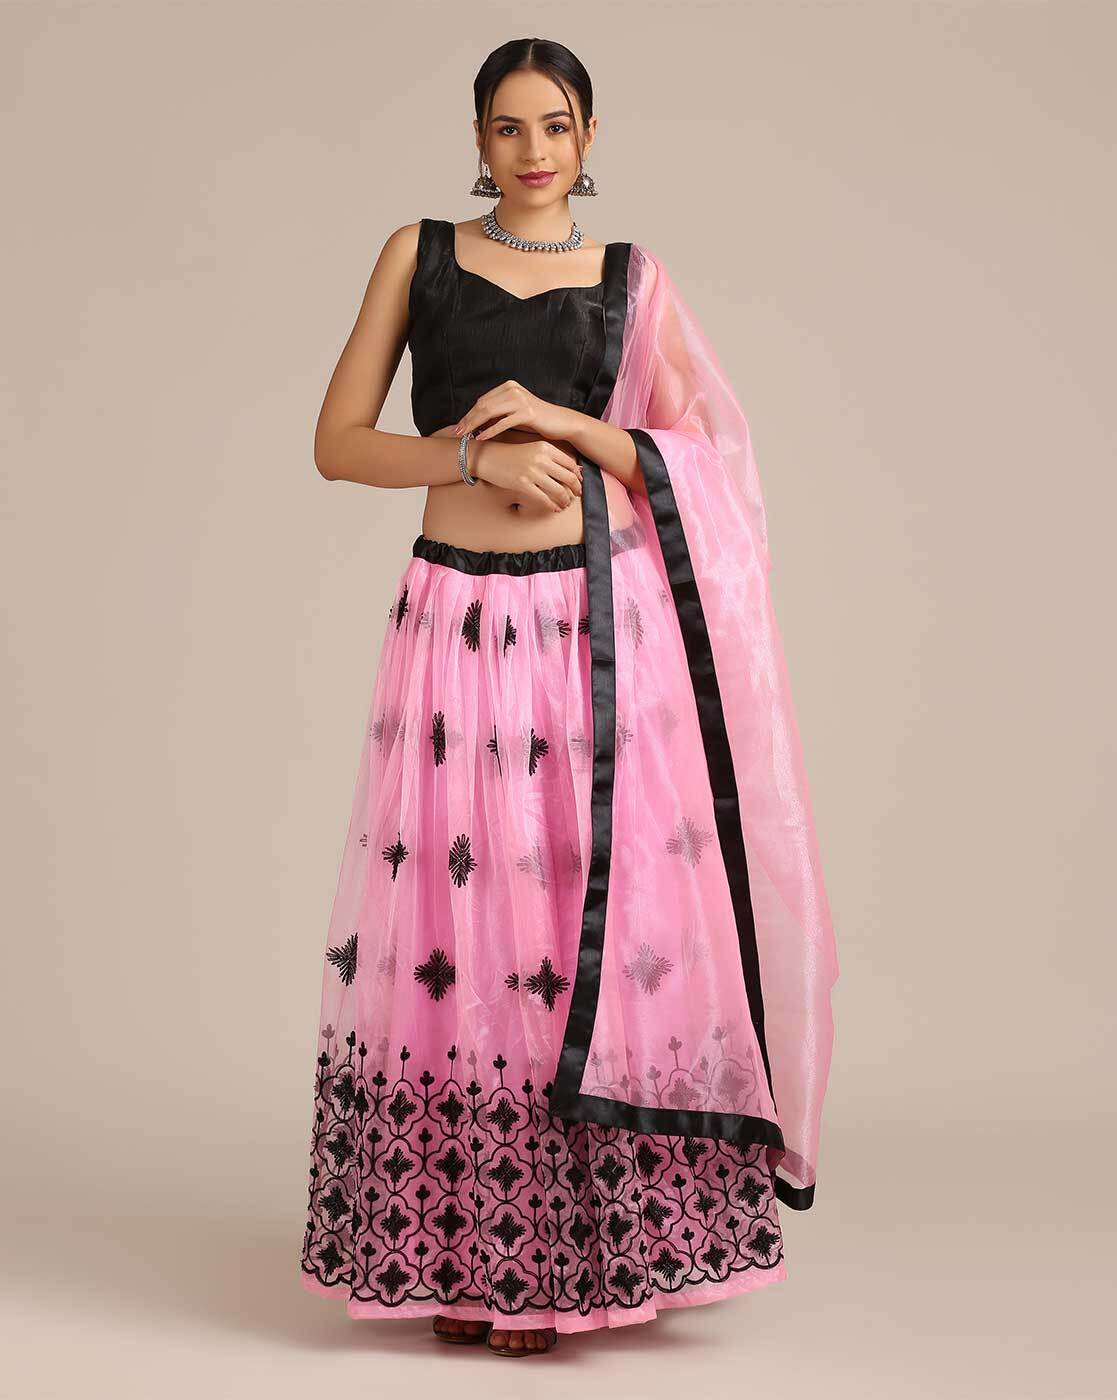 Black and Pink lehenga with design on top - Sri Kumaran Stores